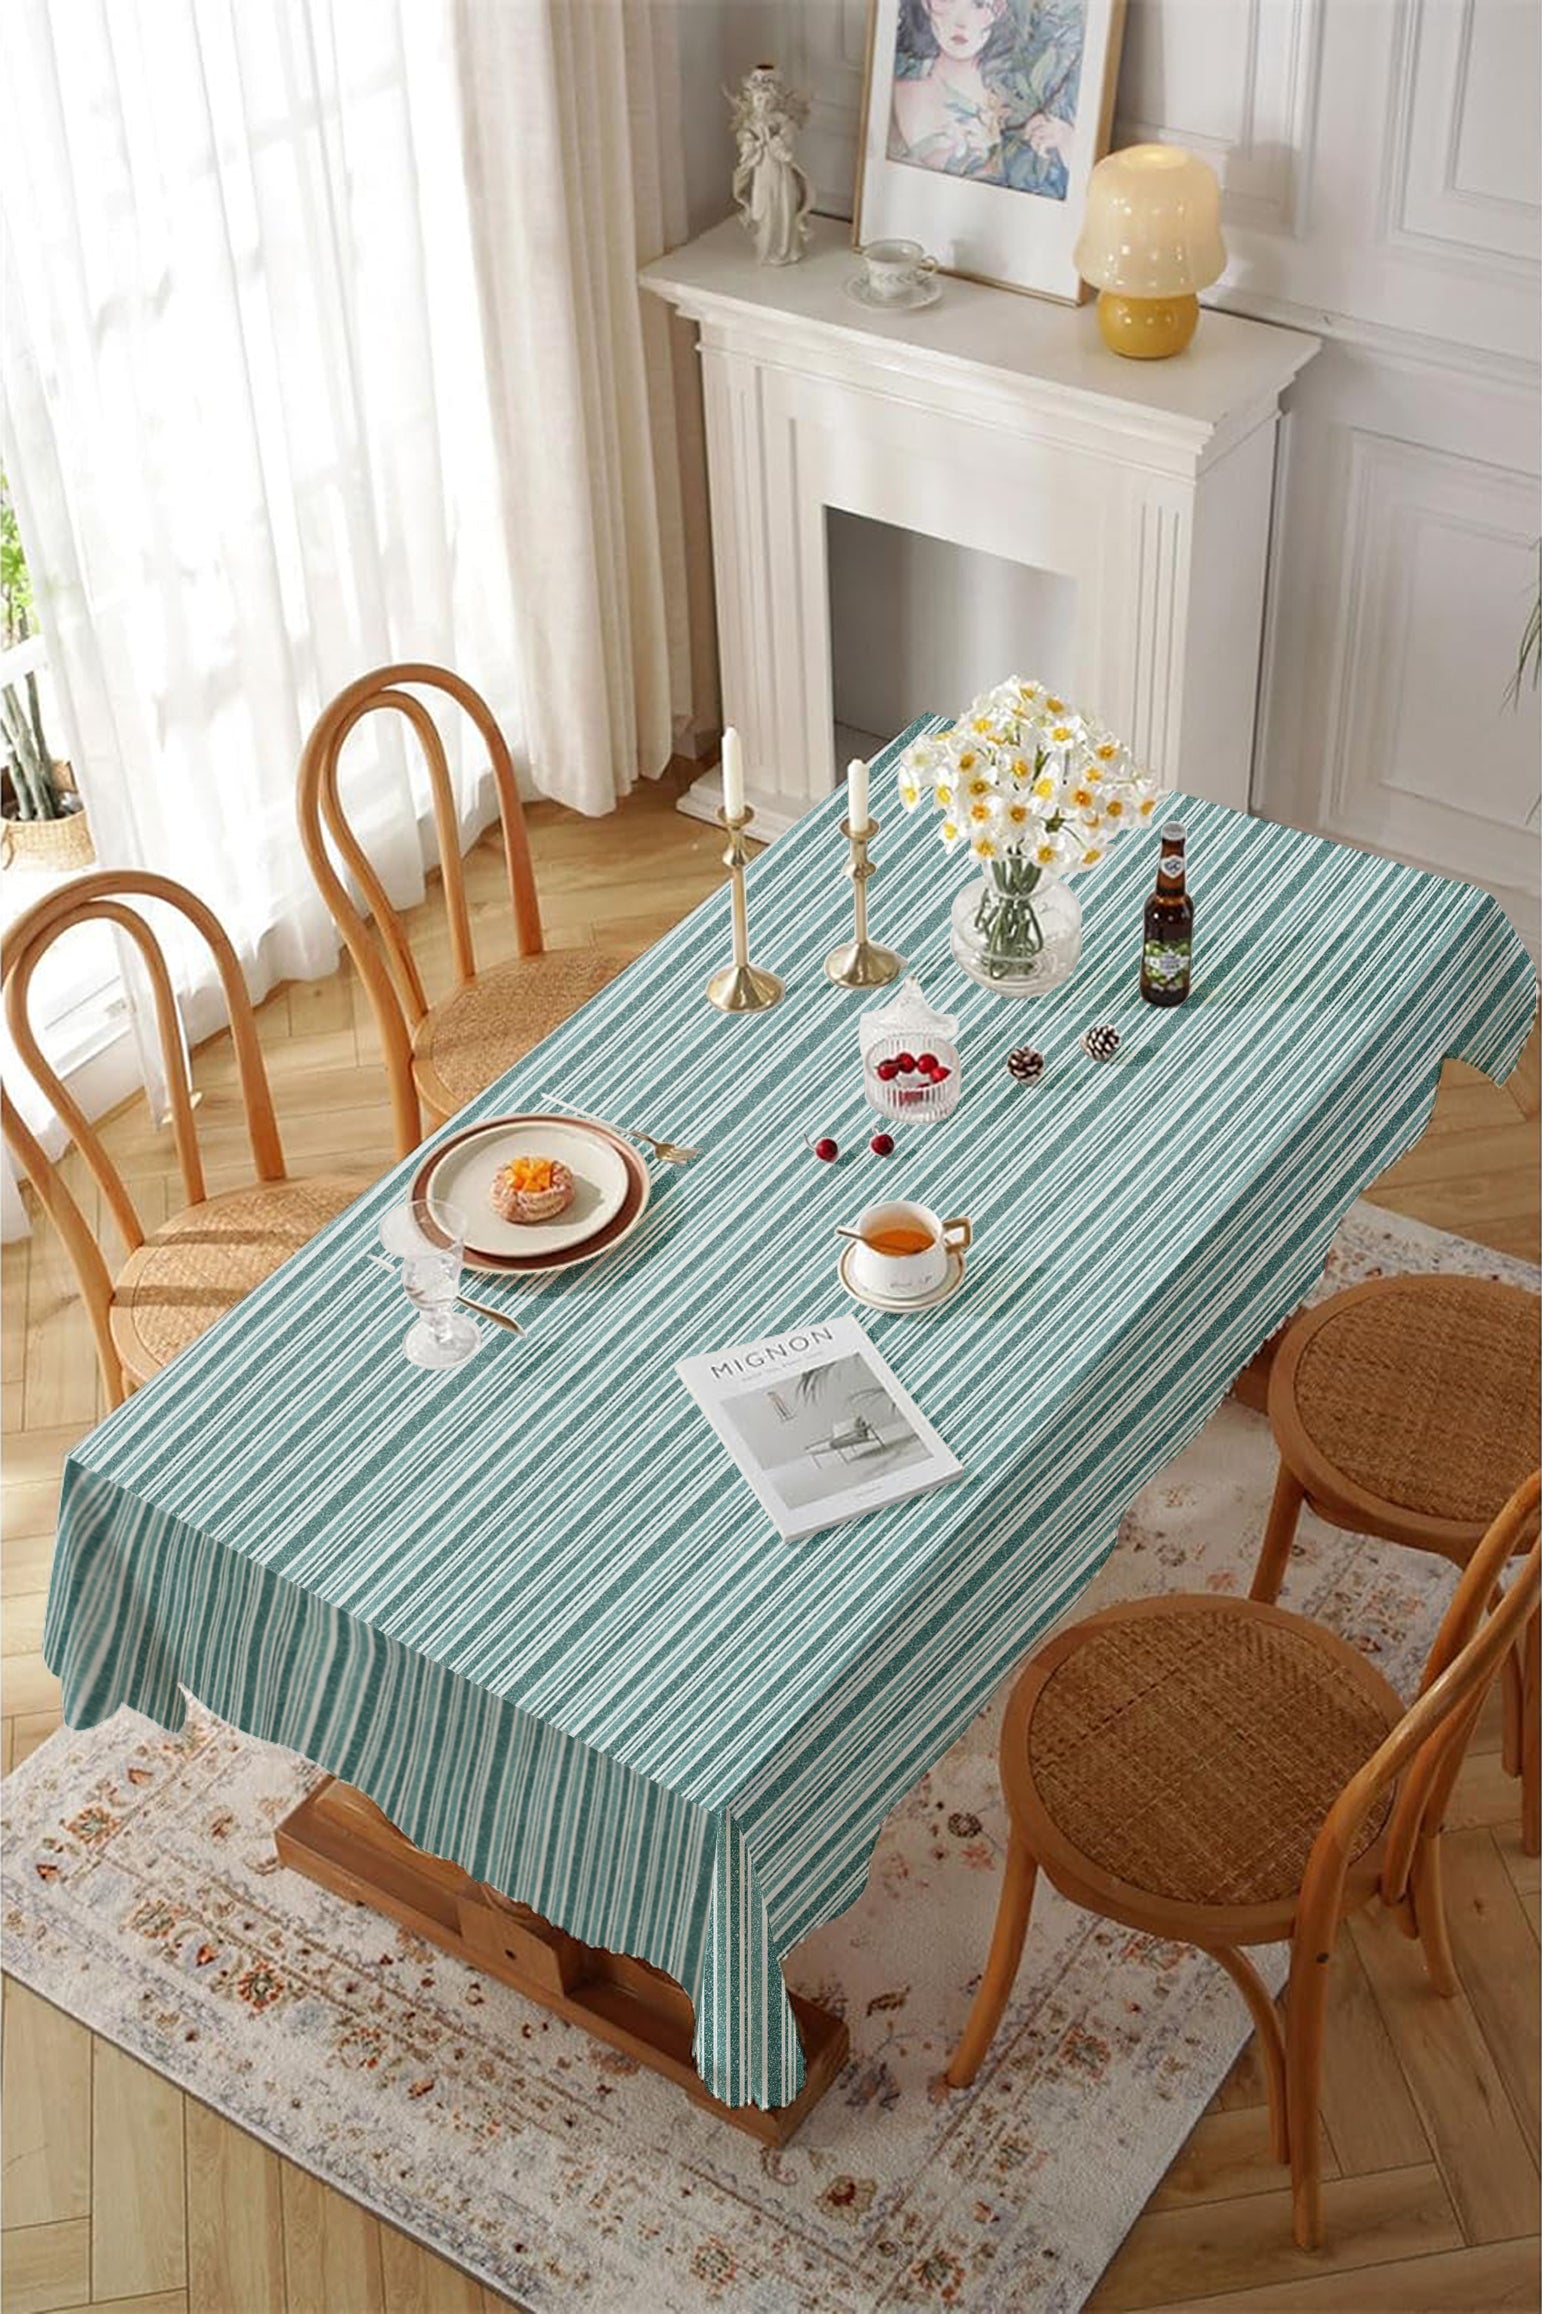 Jodhpur Stripe 6 Seater Table Cloth Teal